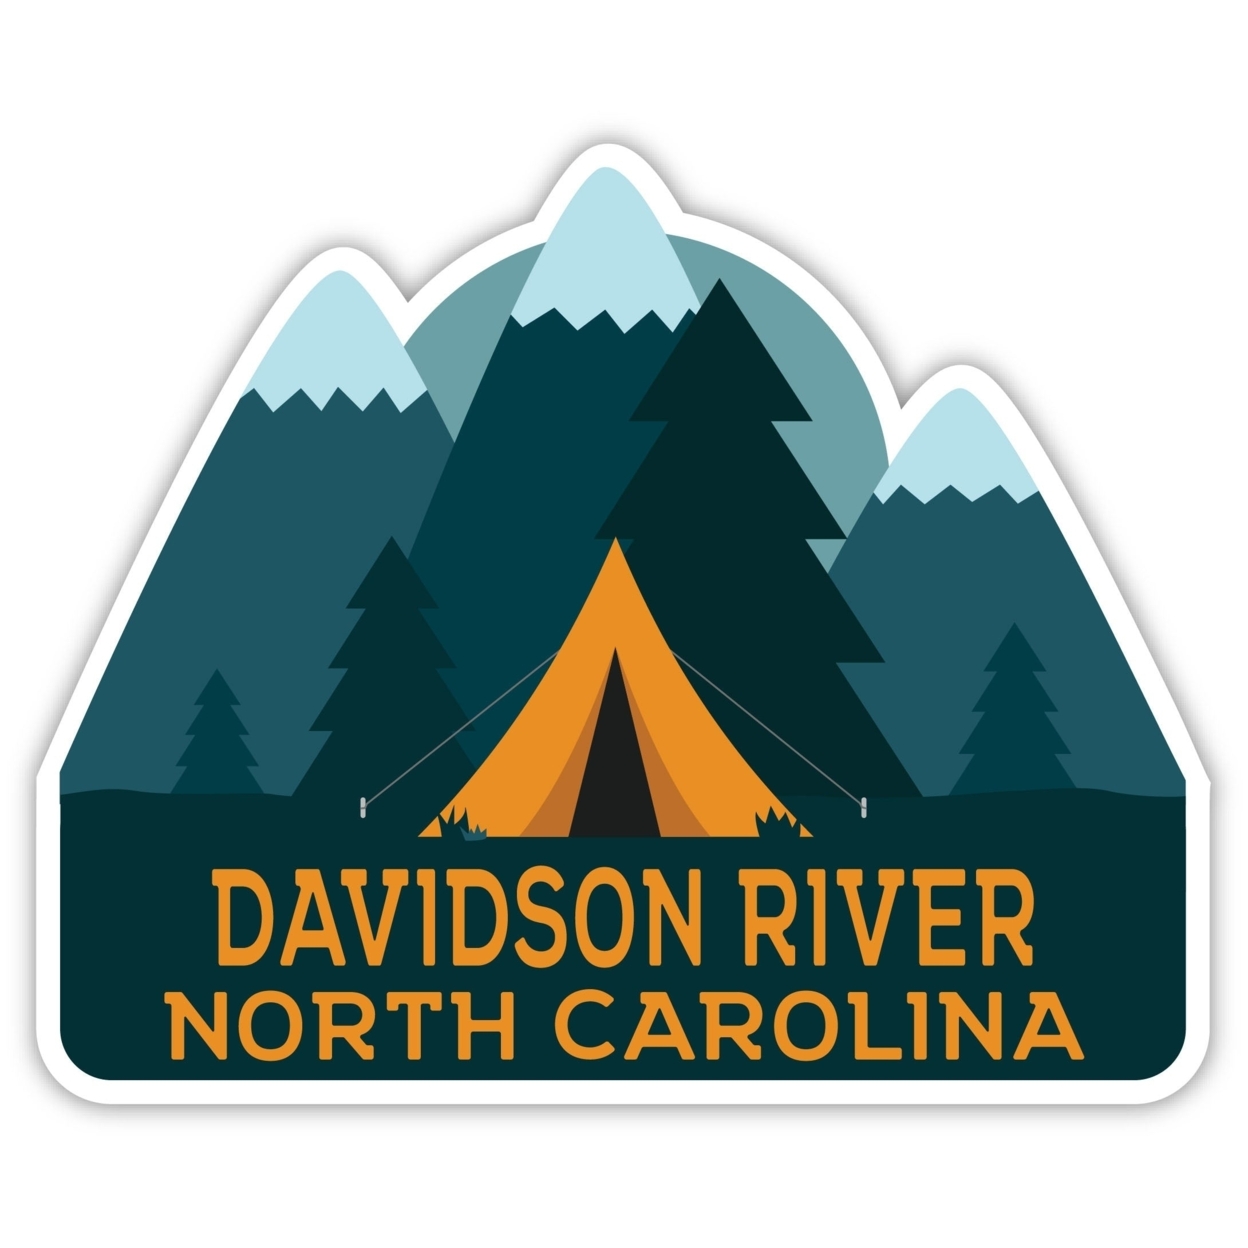 Davidson River North Carolina Souvenir Decorative Stickers (Choose Theme And Size) - 4-Pack, 4-Inch, Tent